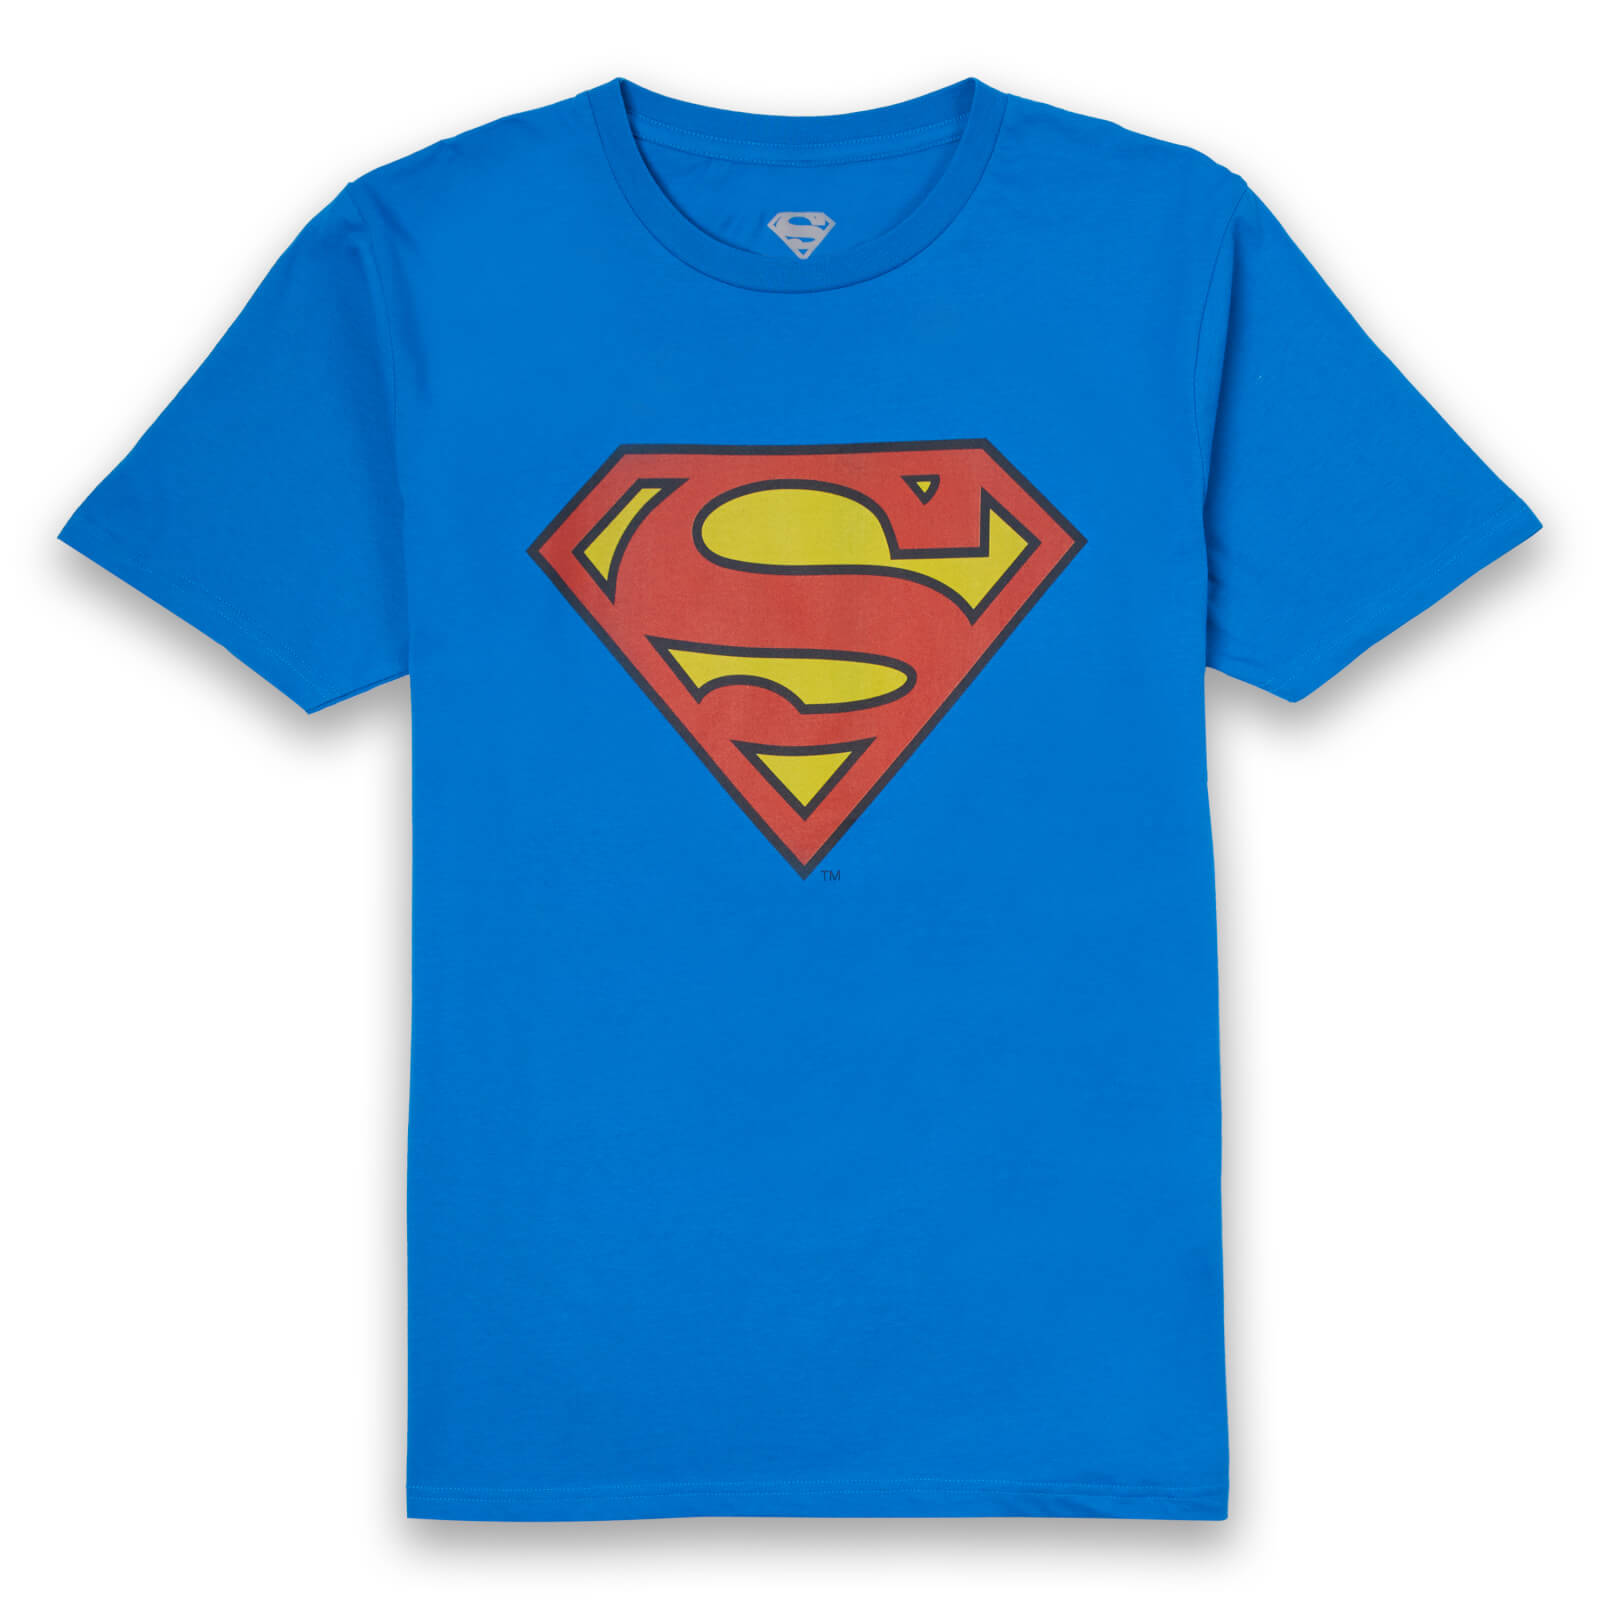 DC Originals Official Superman Shield Men's T-Shirt - Royal Blue - S